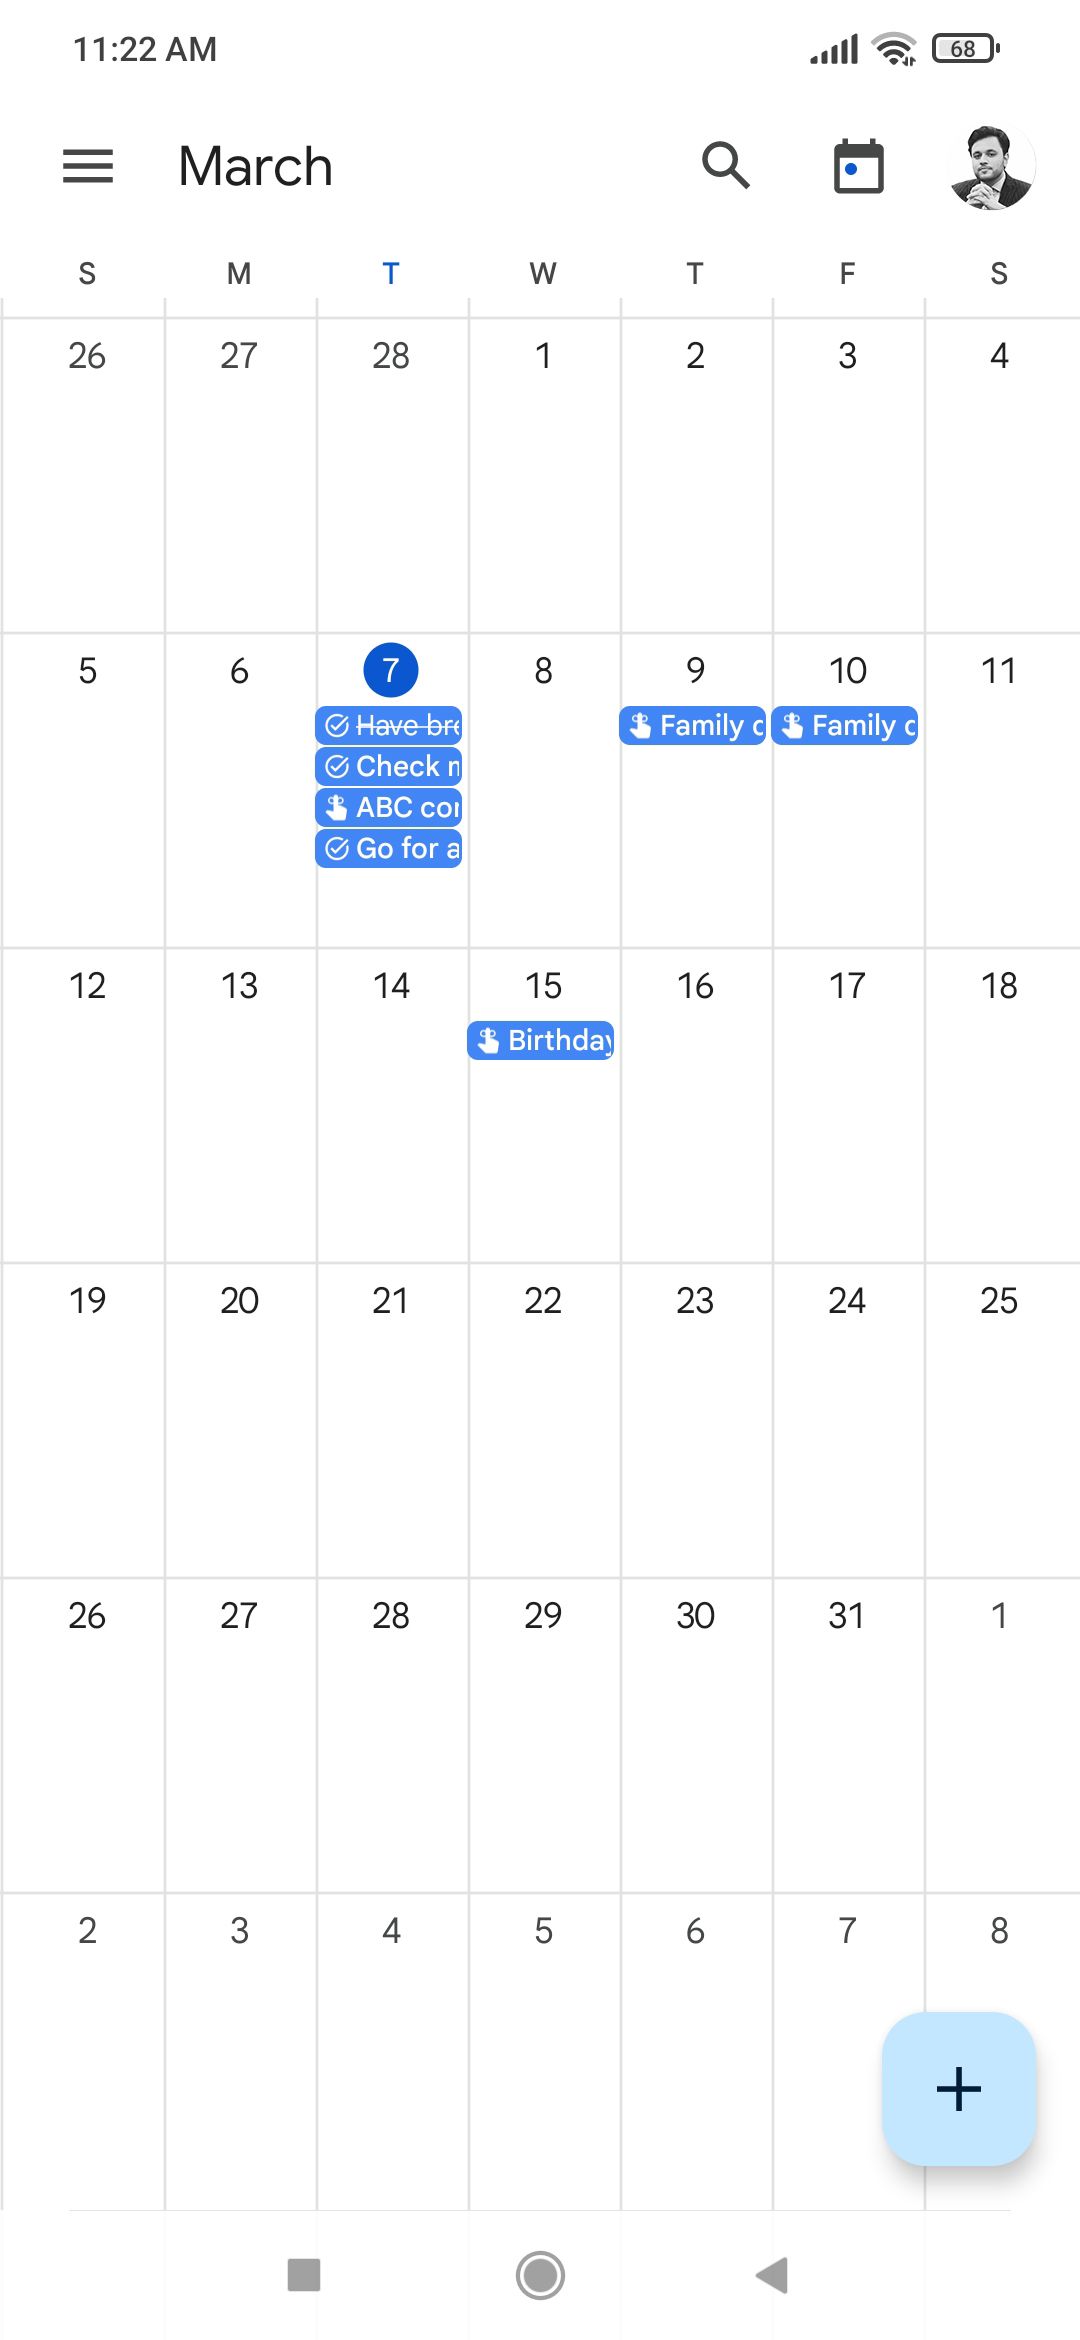 Google Calendar app overall view